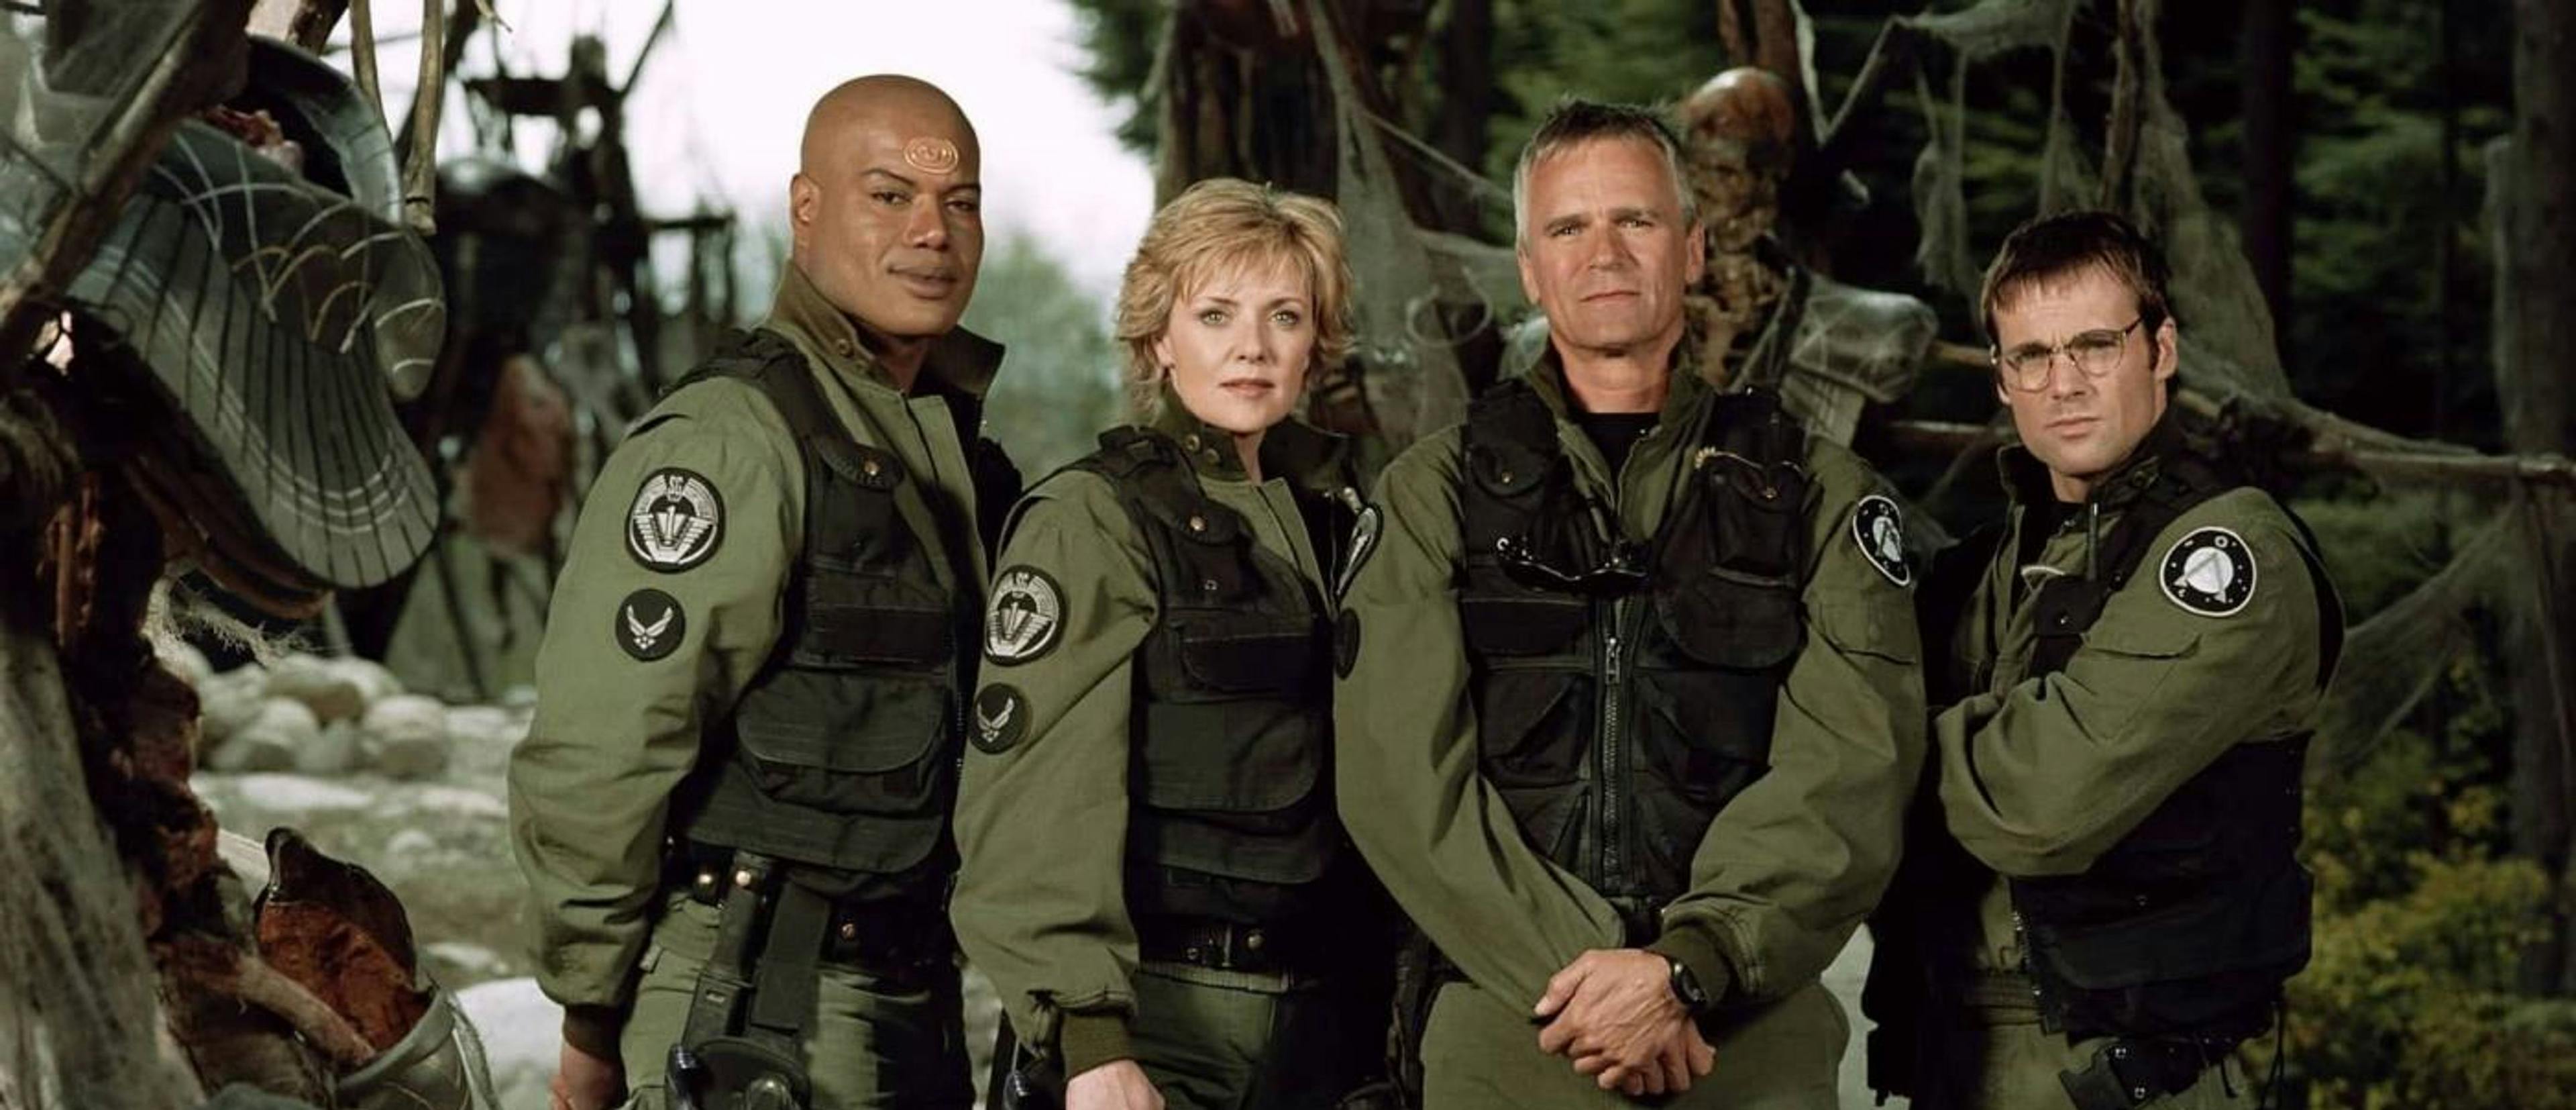 Christopher Judge, Amanda Tapping, Richard Dean Anderson y Michael Shanks eran los protagonistas de 'Stargate SG-1', basada en 'Stargate'